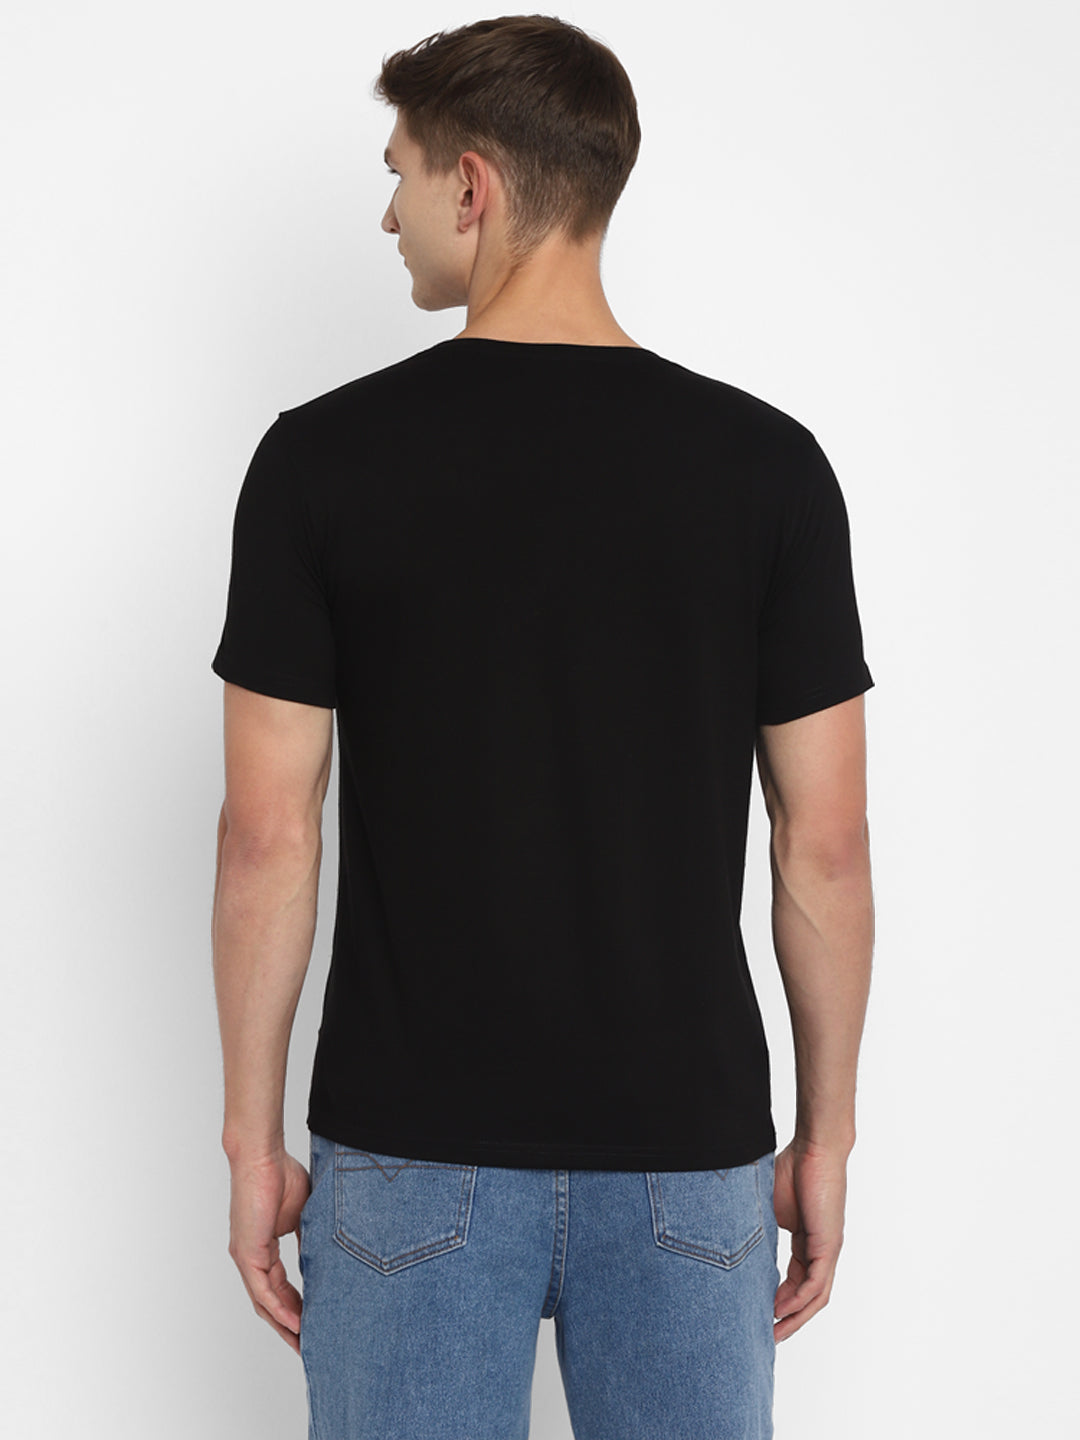 Ap'pulse Men's Short Sleeve Round Neck Printed Tshirt